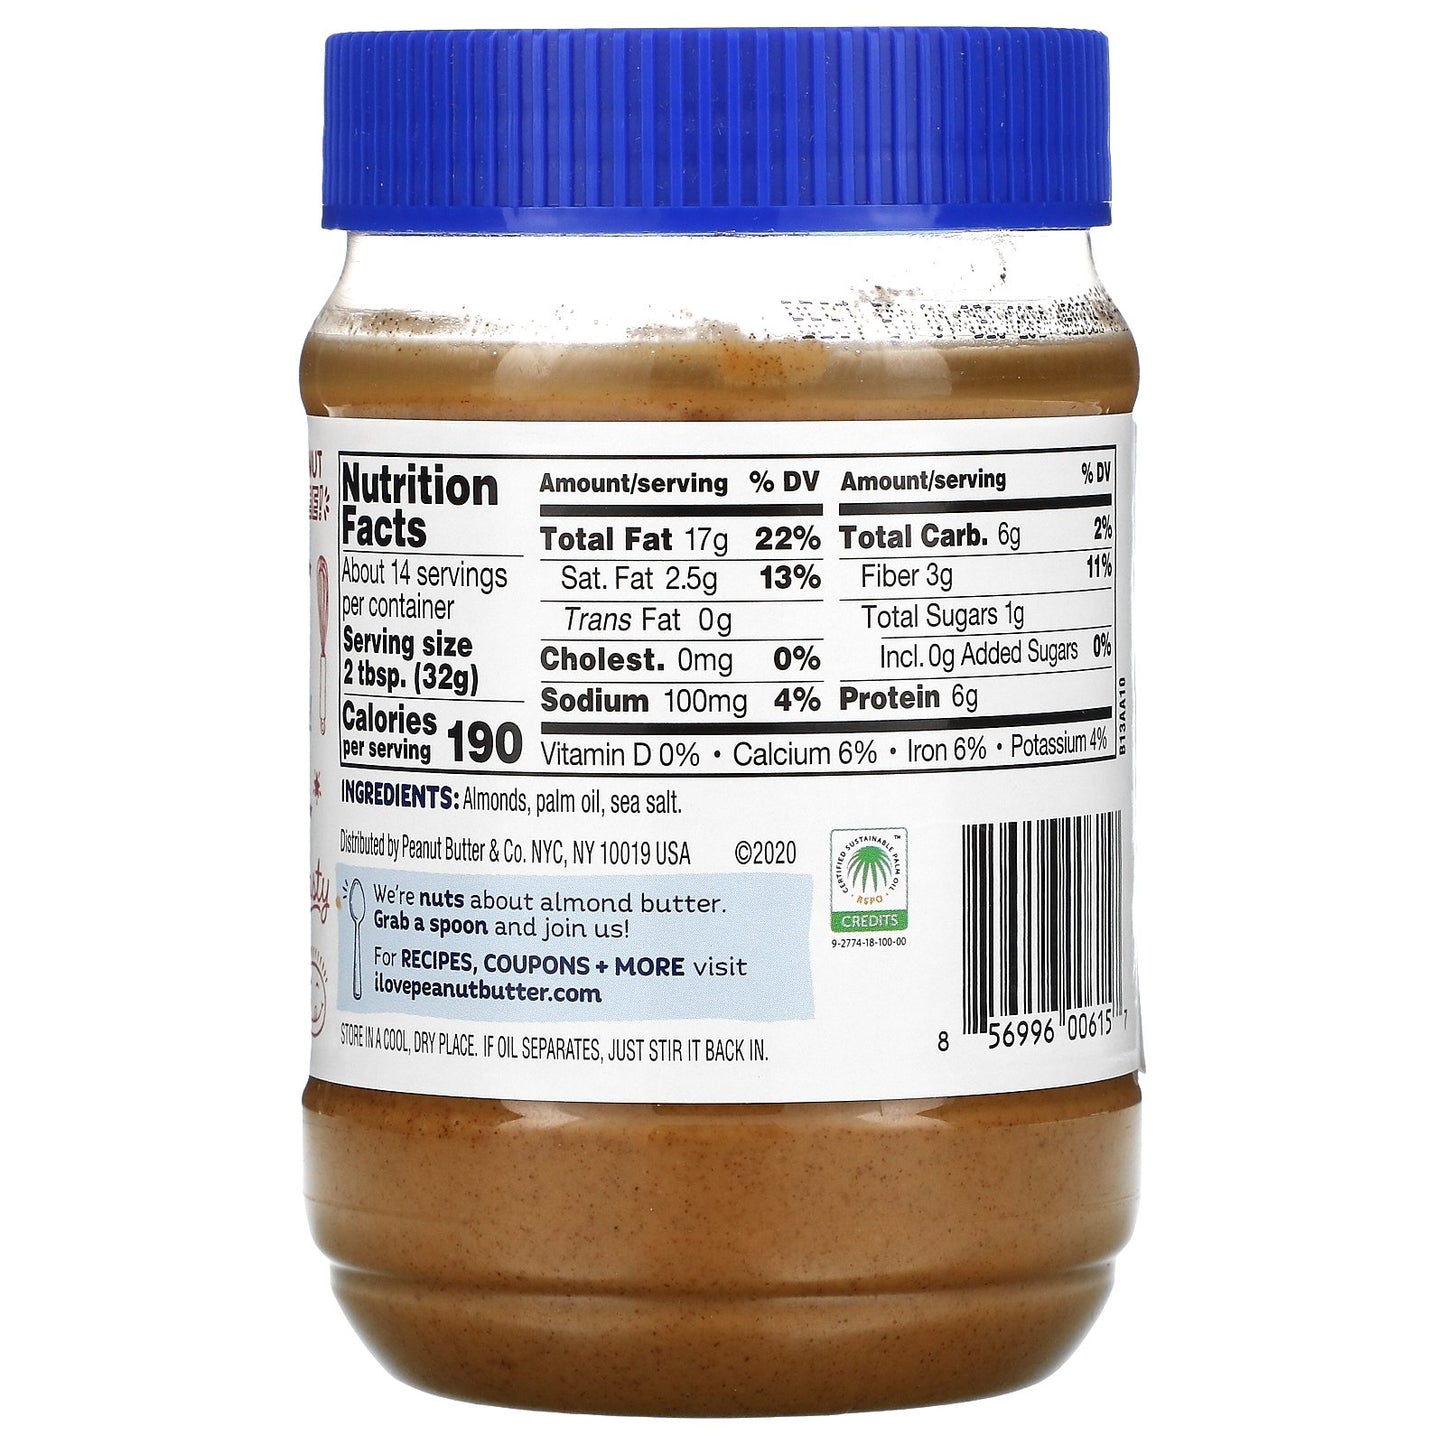 Peanut Butter & Co., Almond Butter Spread, 16 oz (454 g)